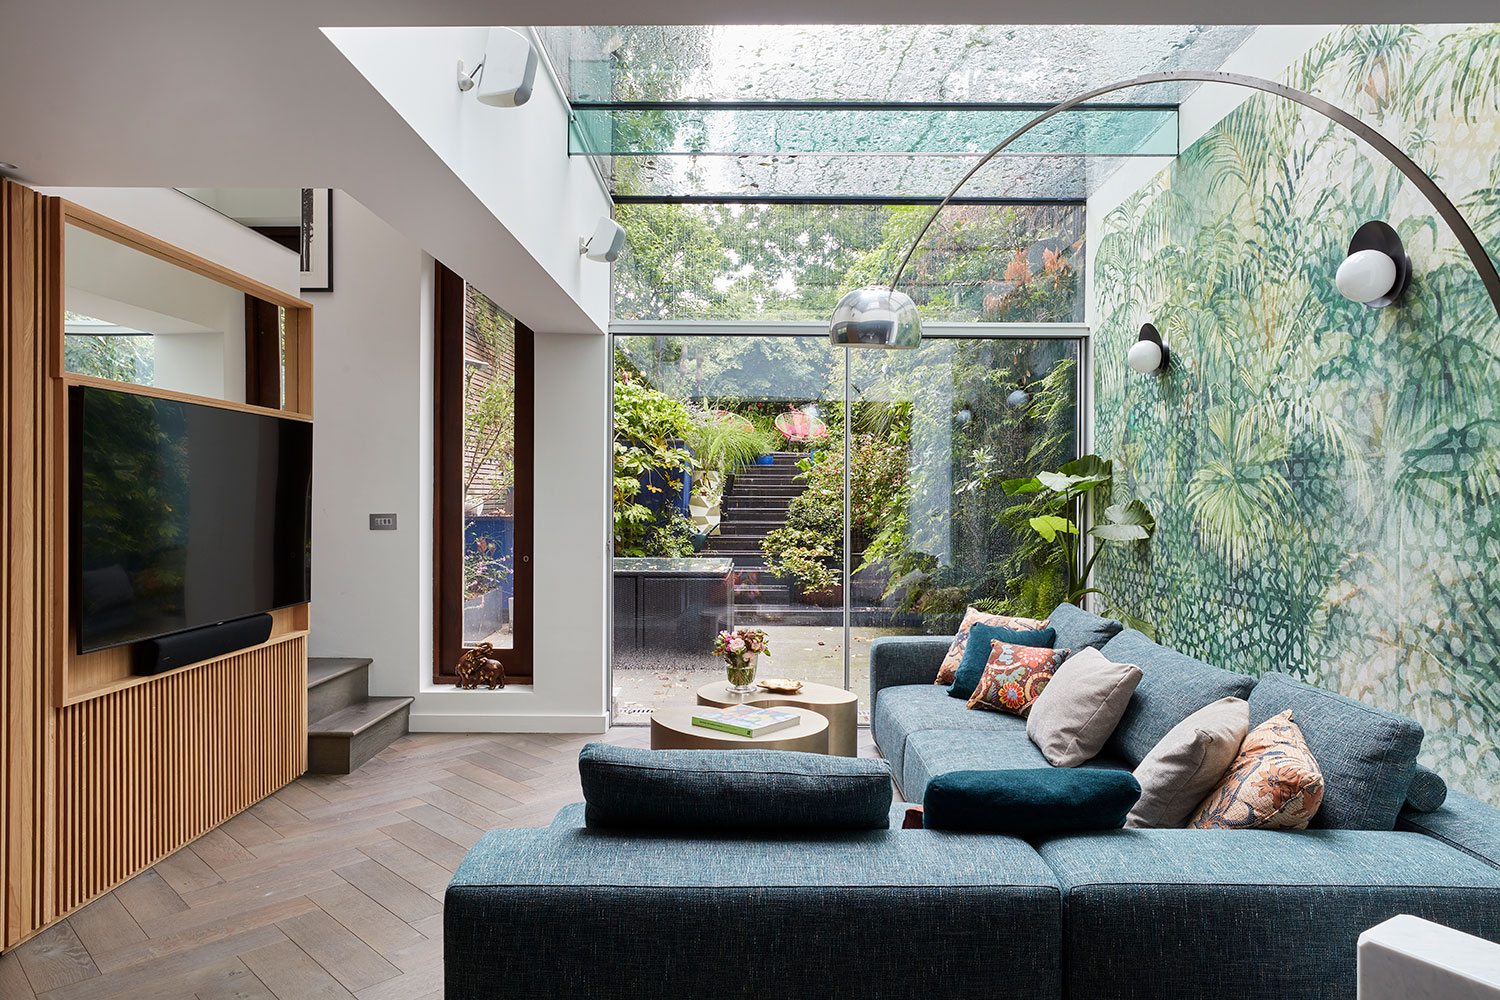 Luxury interior designed garden room